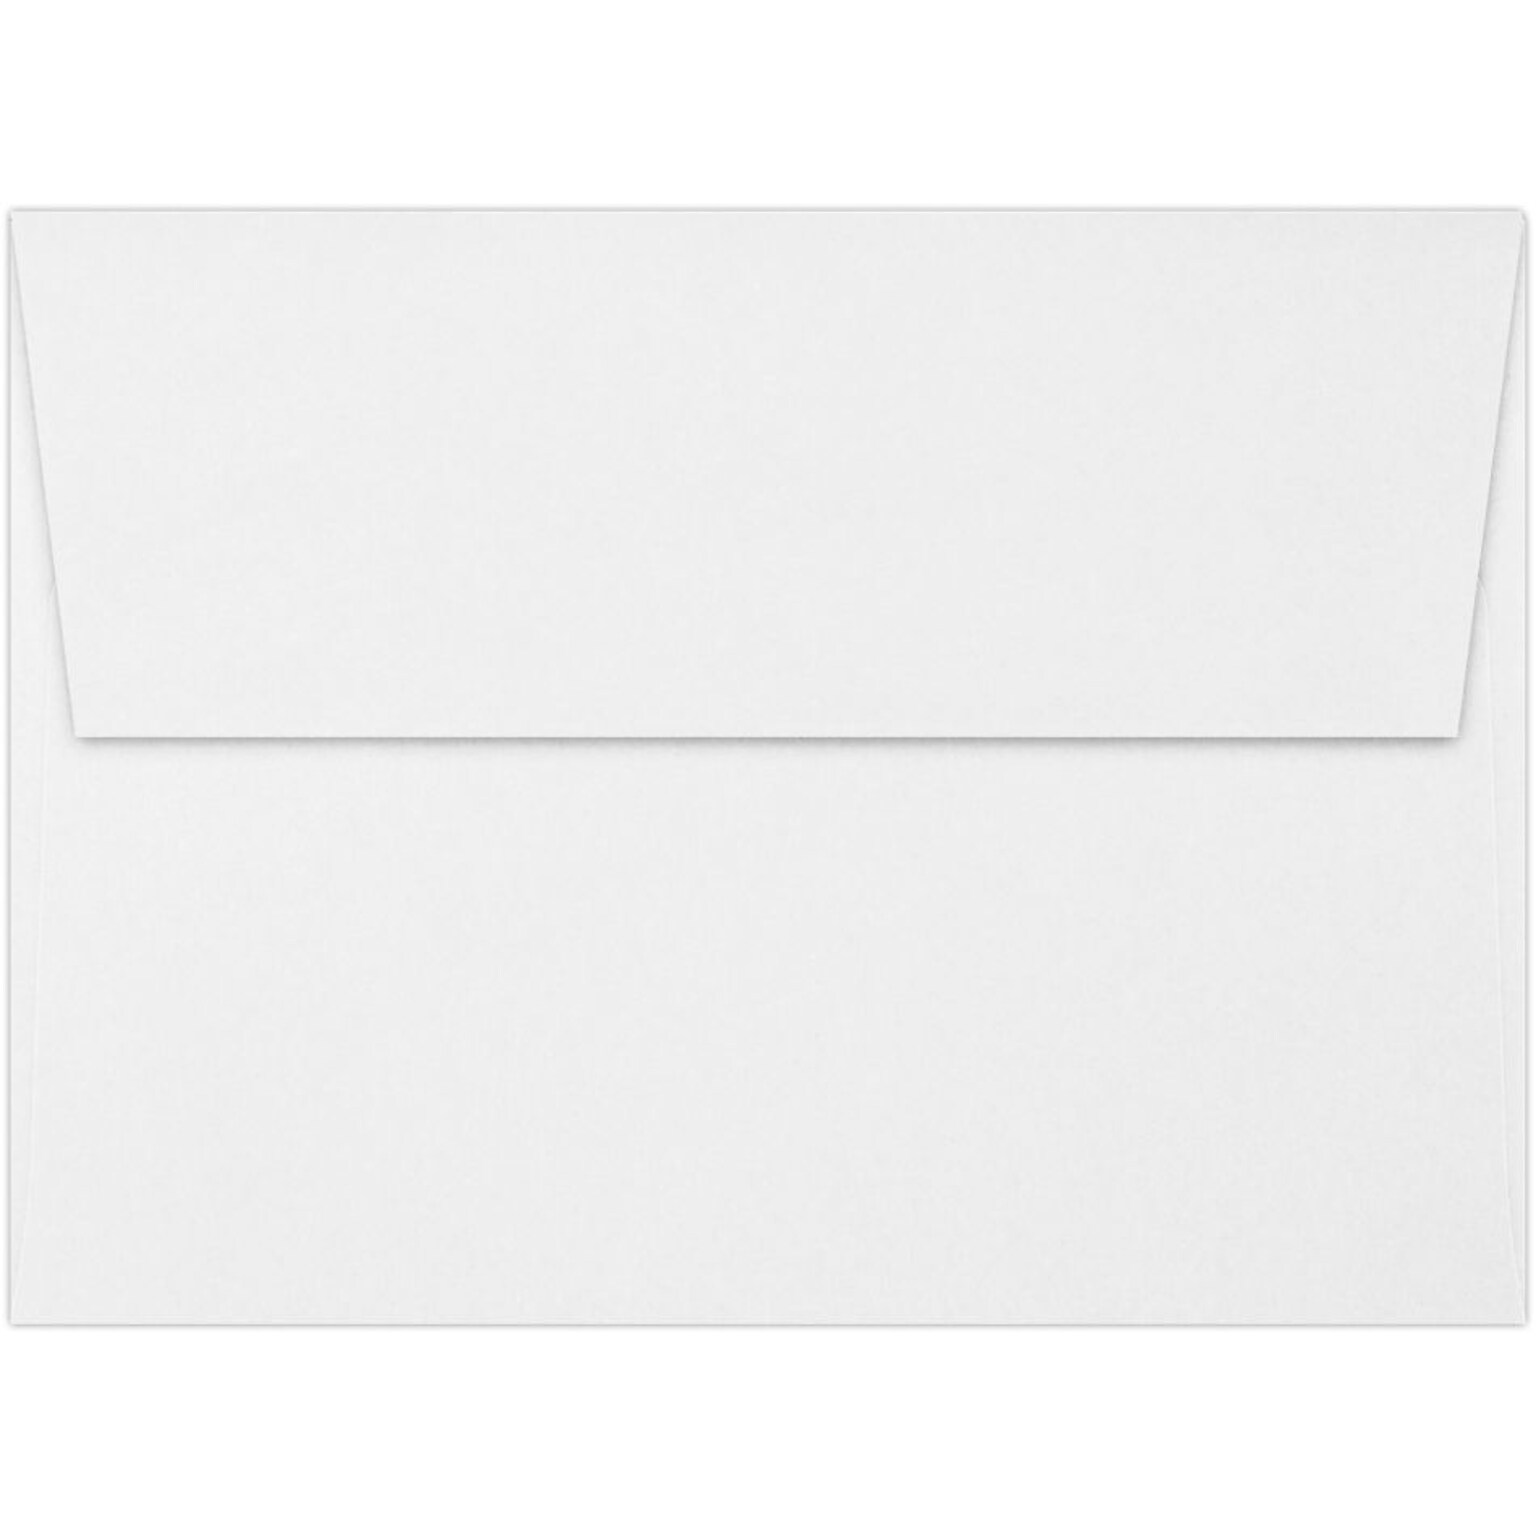 LUX A7 Invitation Envelopes (5 1/4 x 7 1/4) 1000/Pack, 70lb. Classic Linen® Solar White (880-70SWLI-1000)